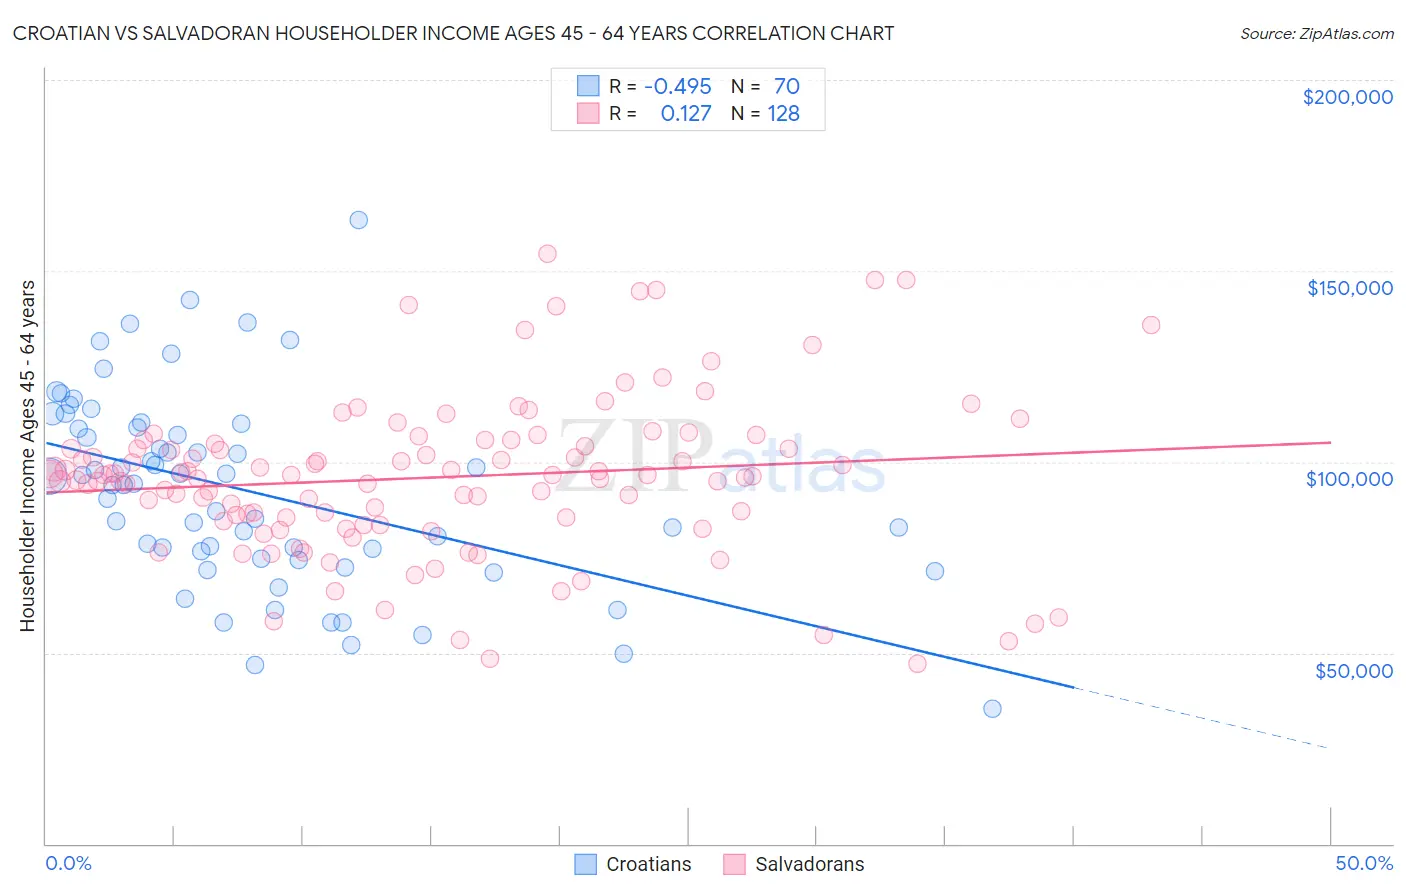 Croatian vs Salvadoran Householder Income Ages 45 - 64 years